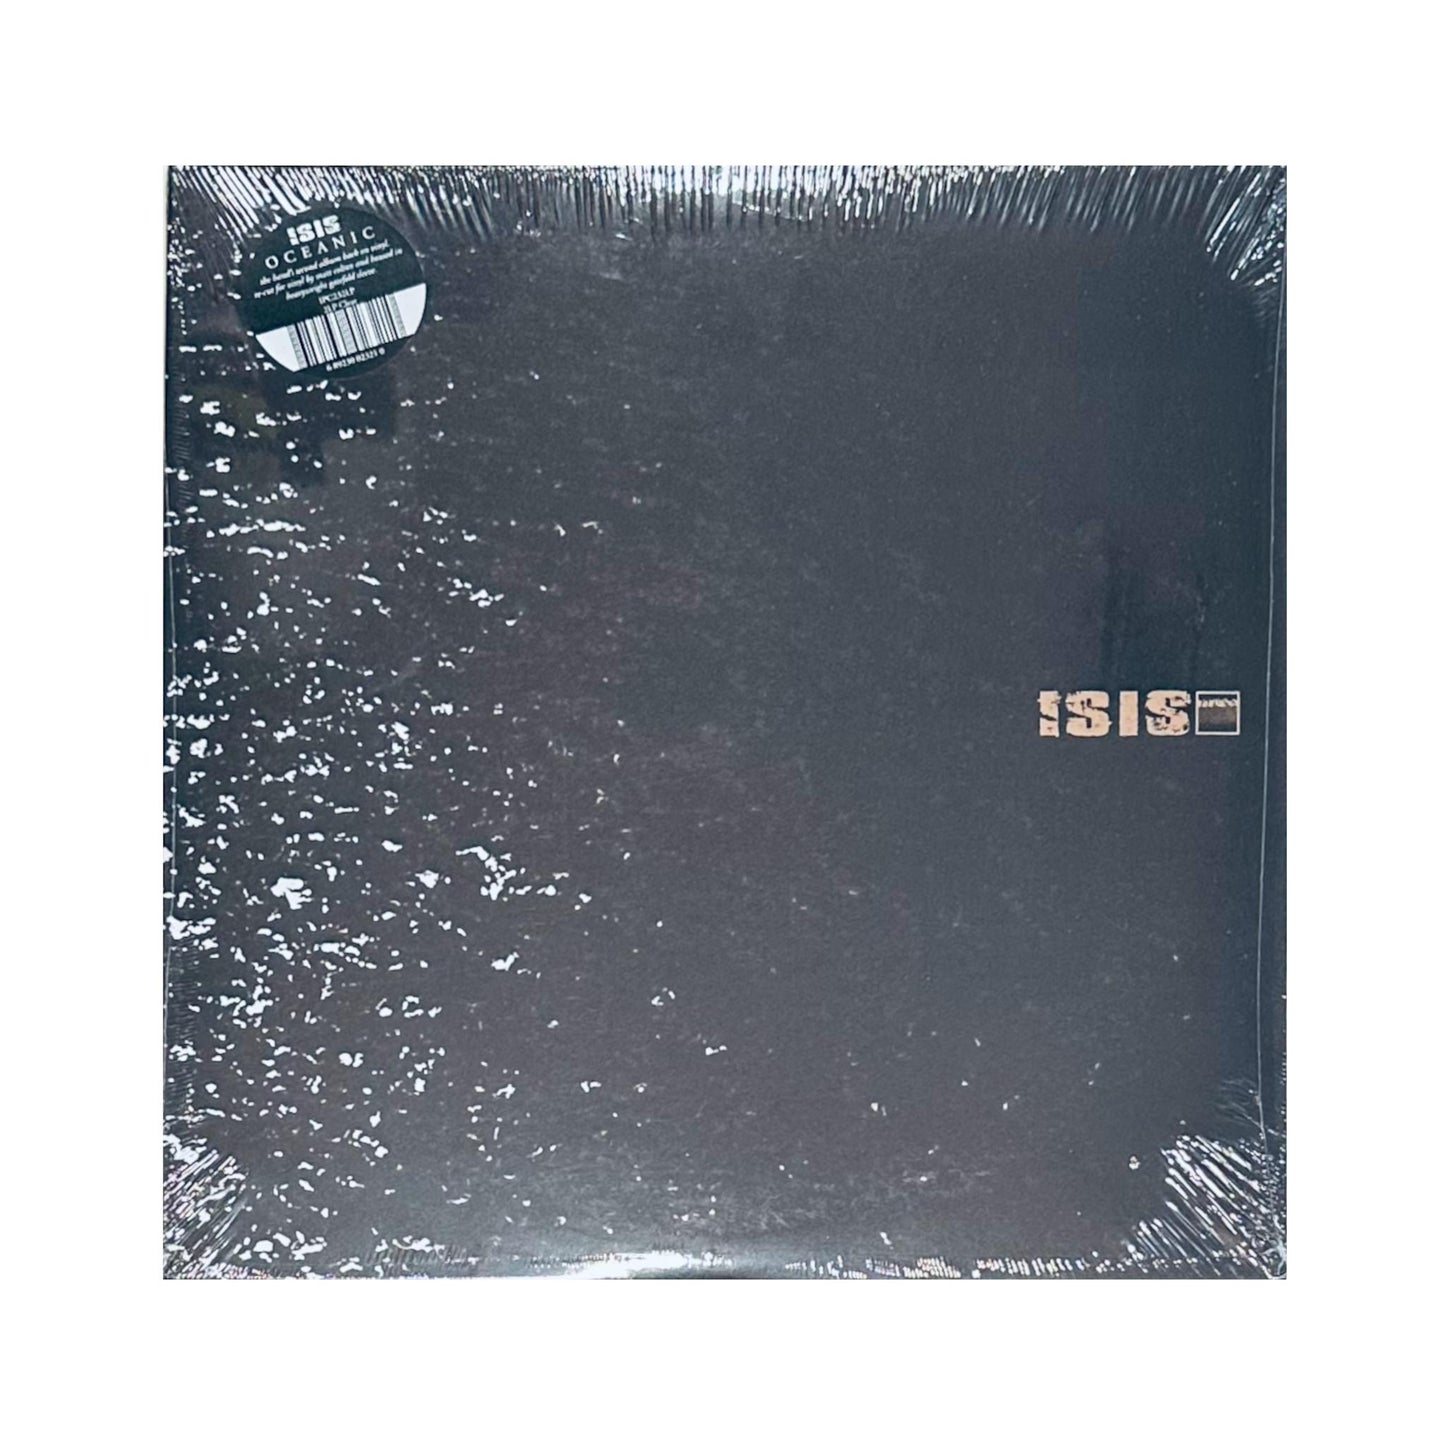 Isis - Oceanic LP (color vinyl)